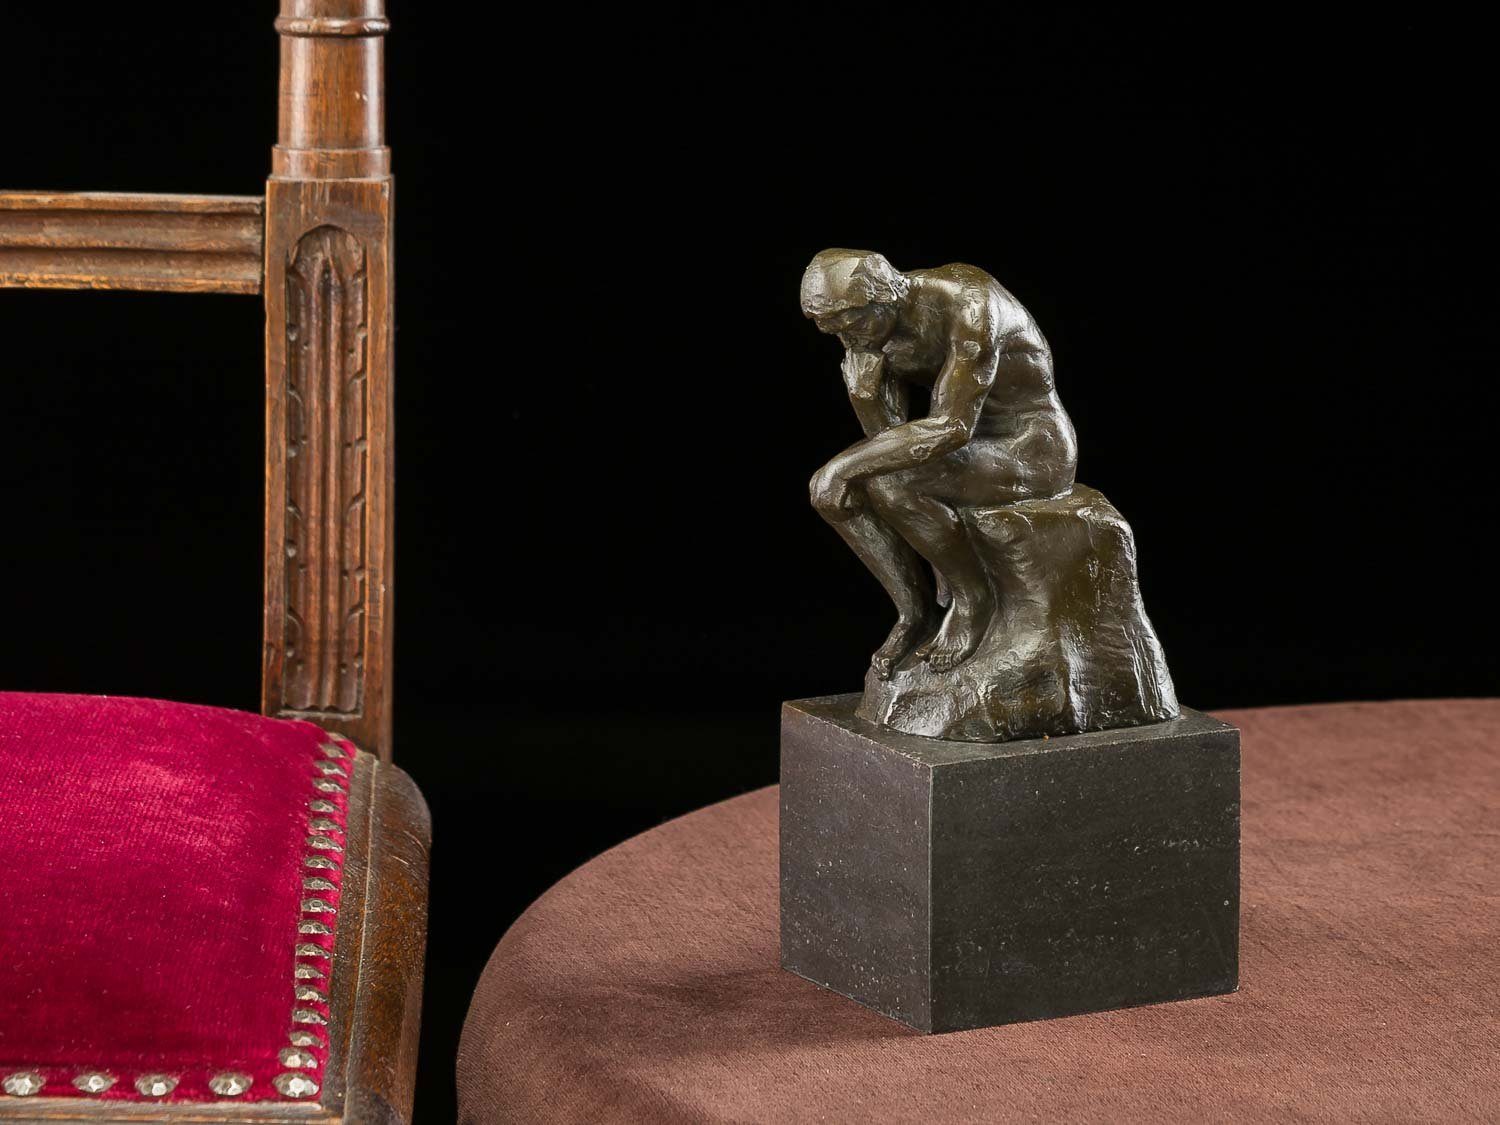 Rodin Rep Skulptur Skulptur Denker nach Bronzeskulptur Aubaho Bronze Bronzefigur Kopie